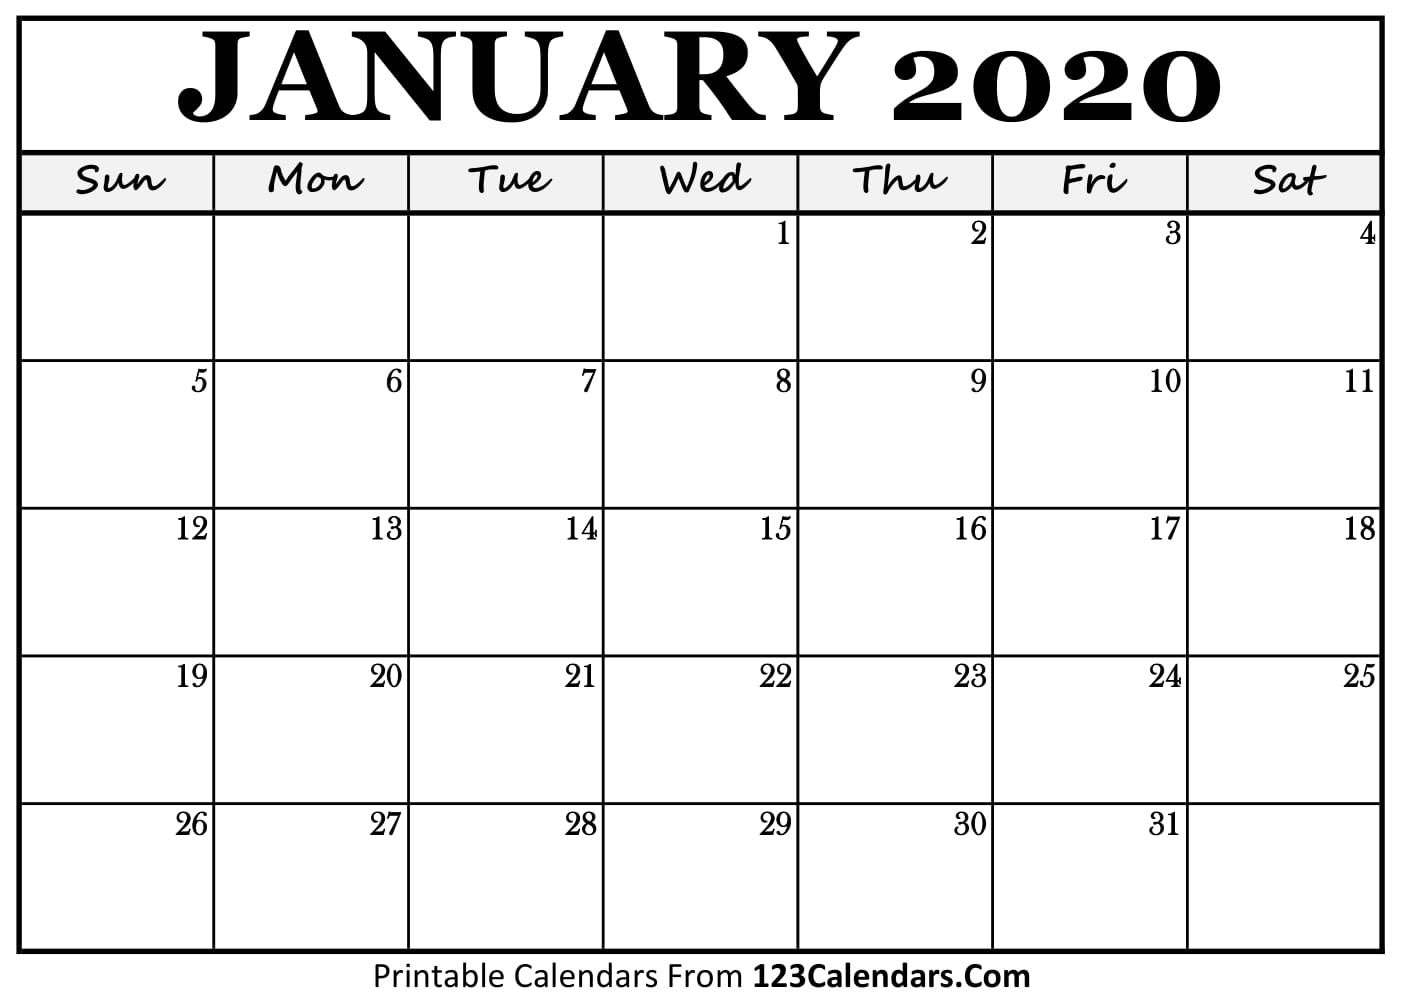 Free Printable Calendar | 123Calendars Free Monthly Calendar 2018 2020 Printable